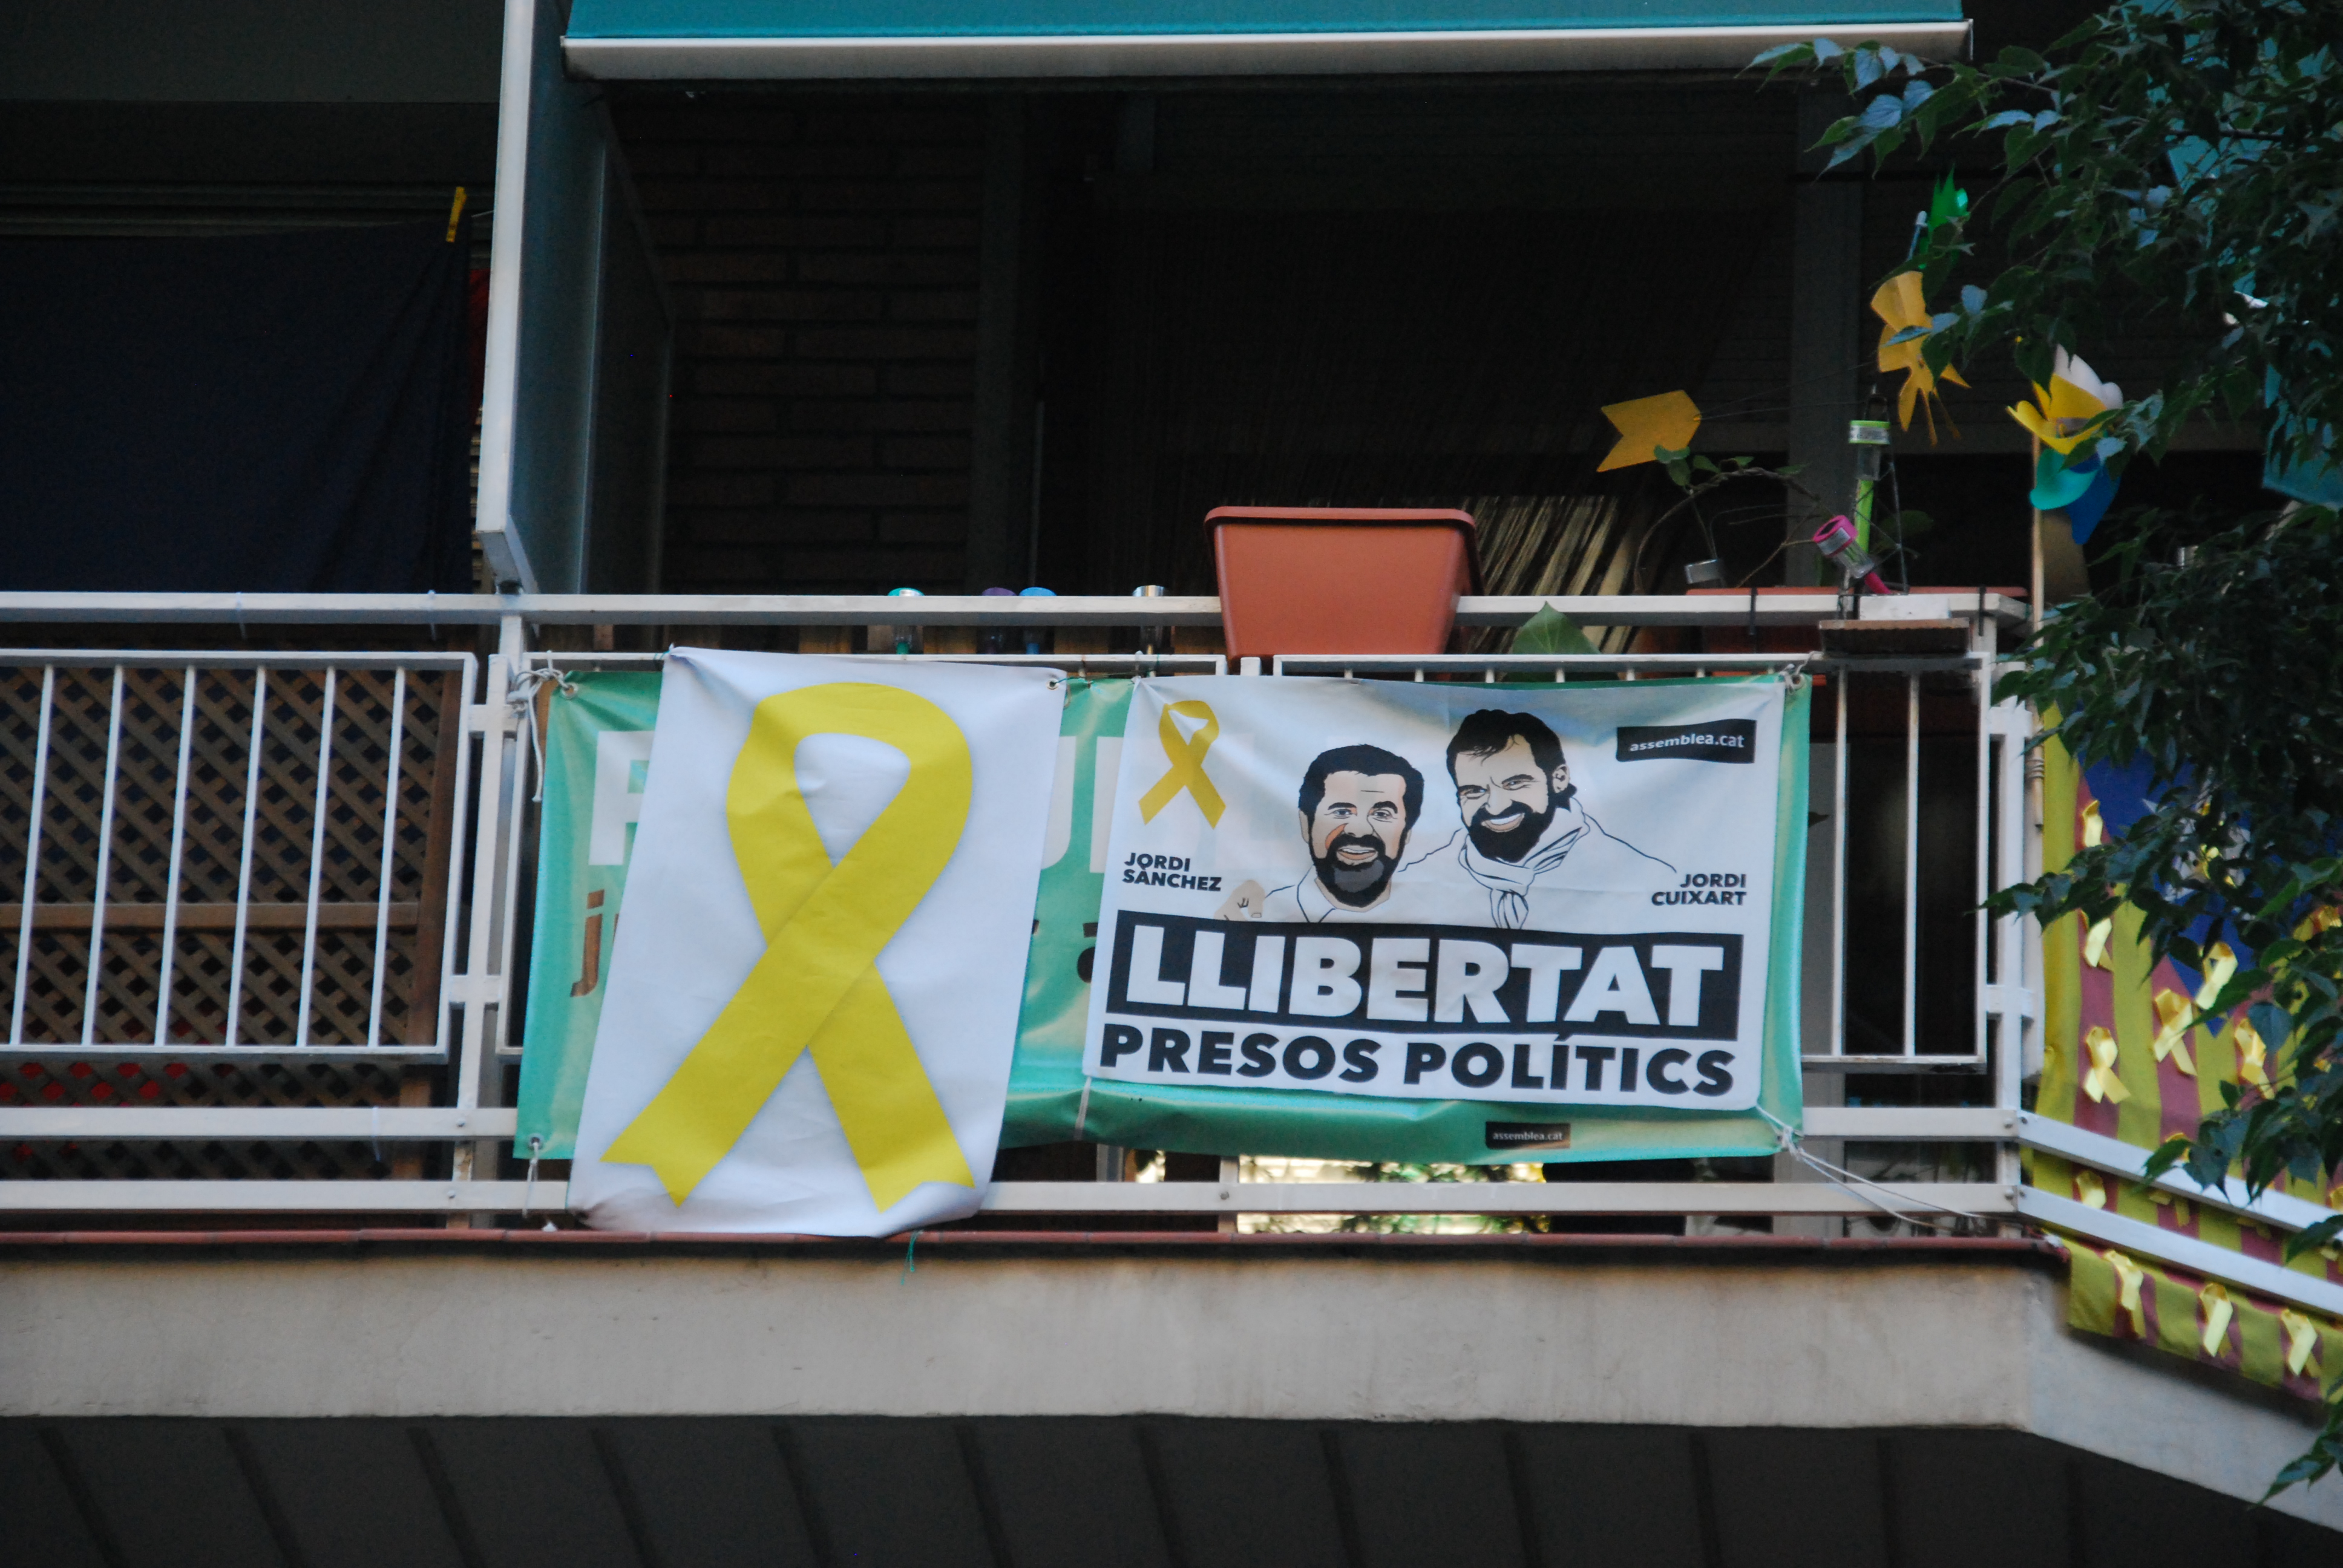 Referendum and yellow ribbon symbols (by Marta Pedregal)